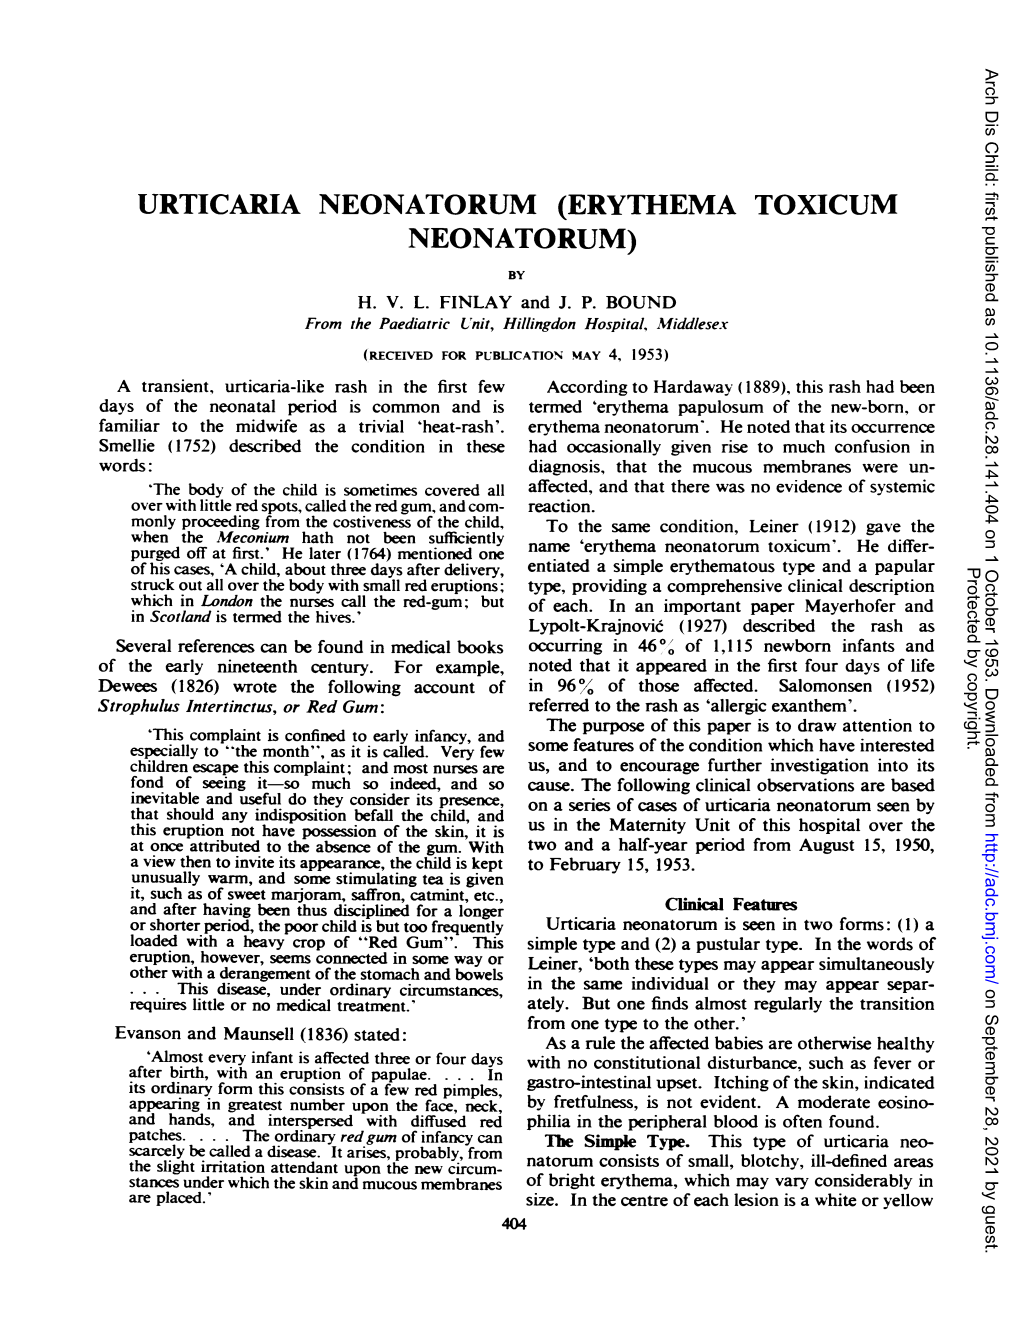 Urticaria Neonatorum (Erythema Toxicum Neonatorum) by H